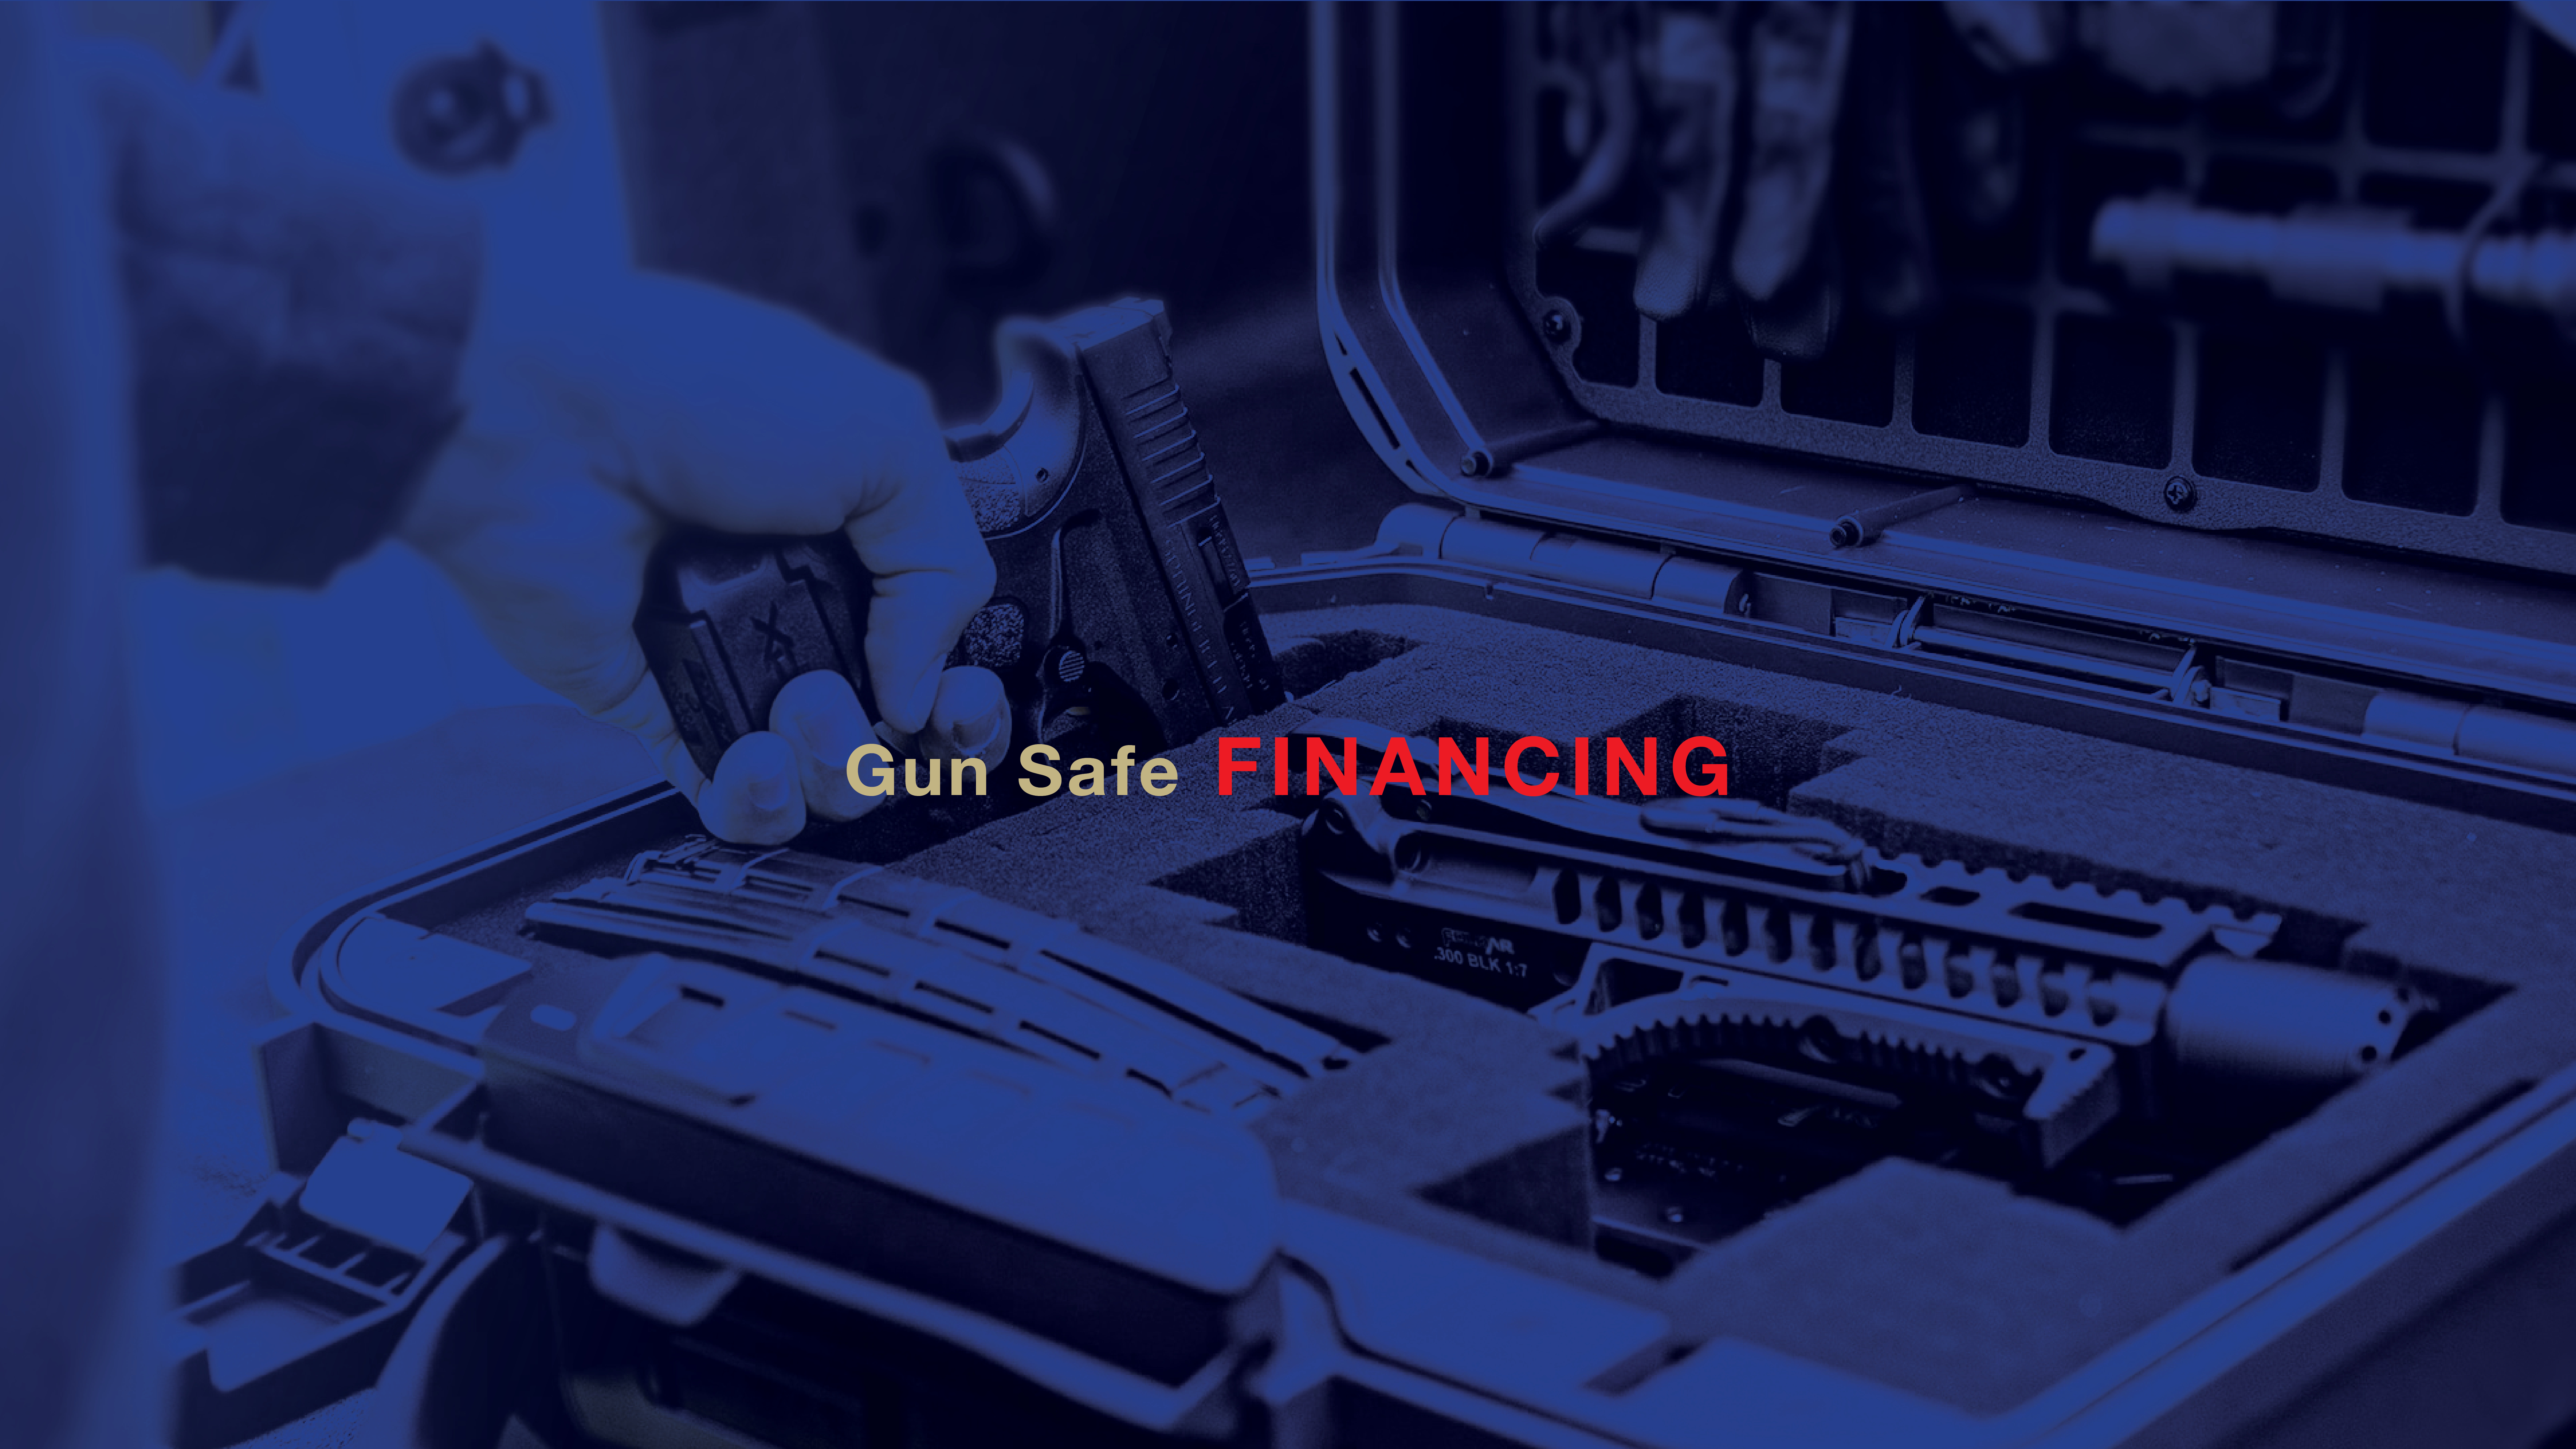 Gun Safe Financing Services Texas Safe and Vaults Austin Texas